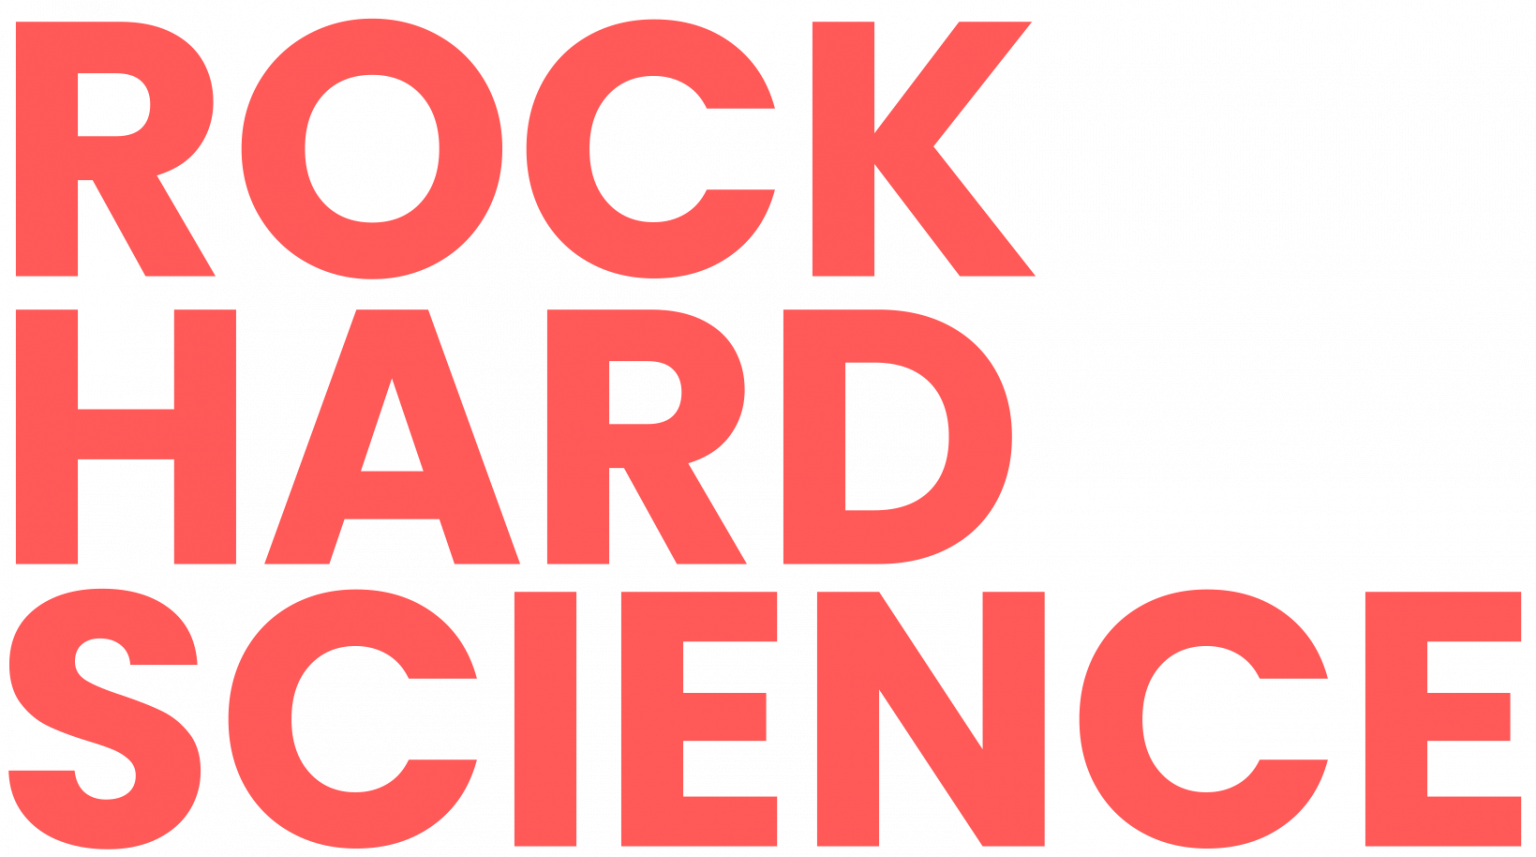 ROCK HARD SCIENCE